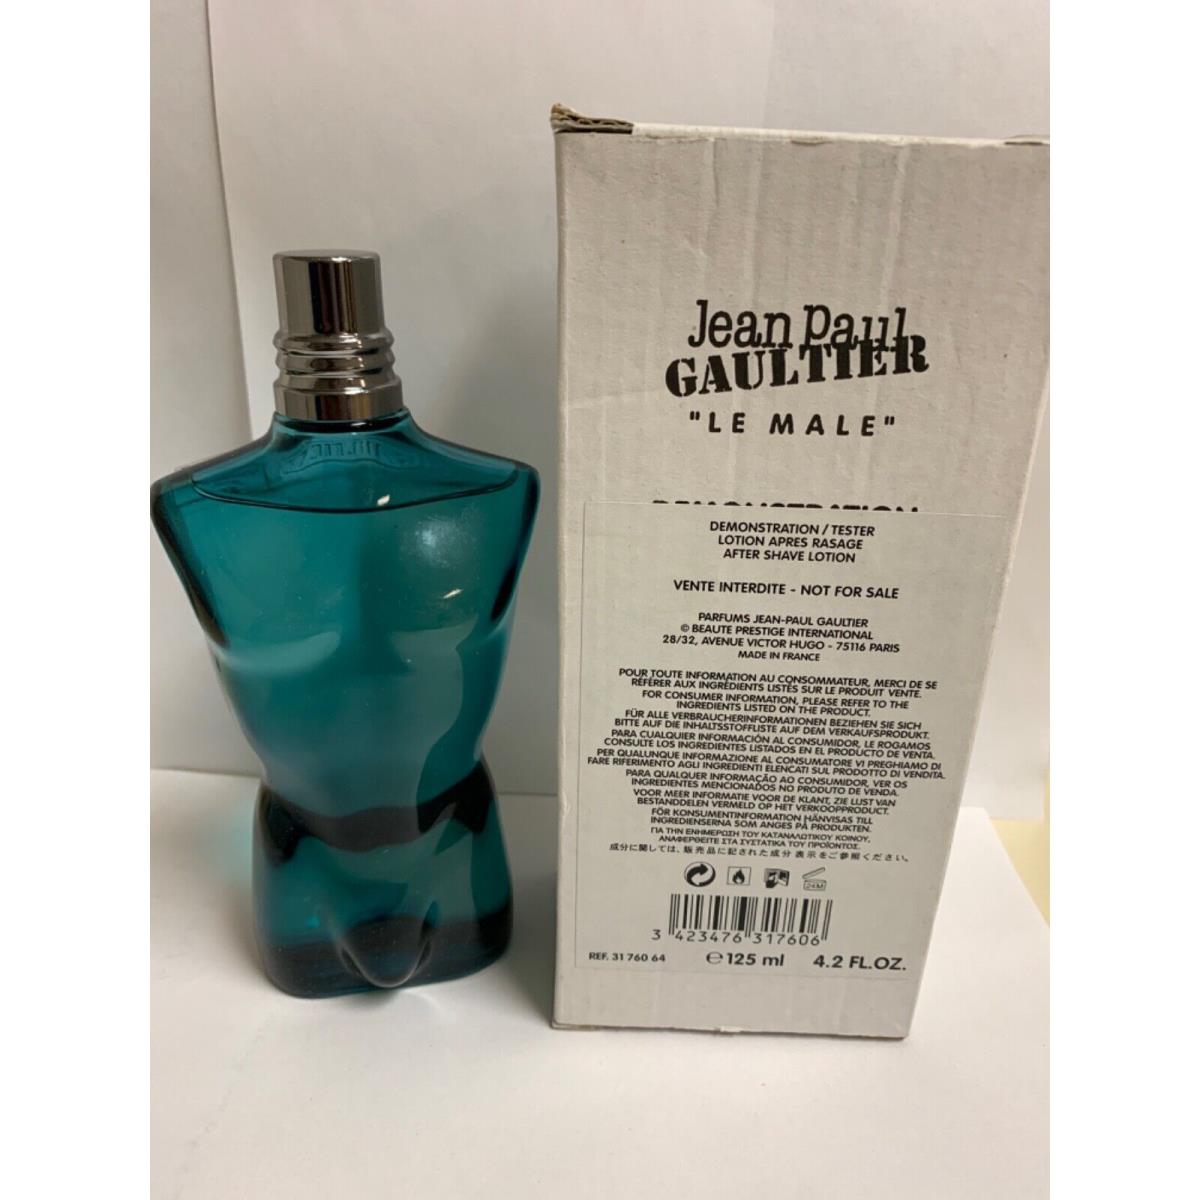 Jean Paul Gaultier Cologne By Jean Paul Gaultier For Men 4.2 oz After Shave  - Jean Paul Gaultier perfume,cologne,fragrance,parfum 